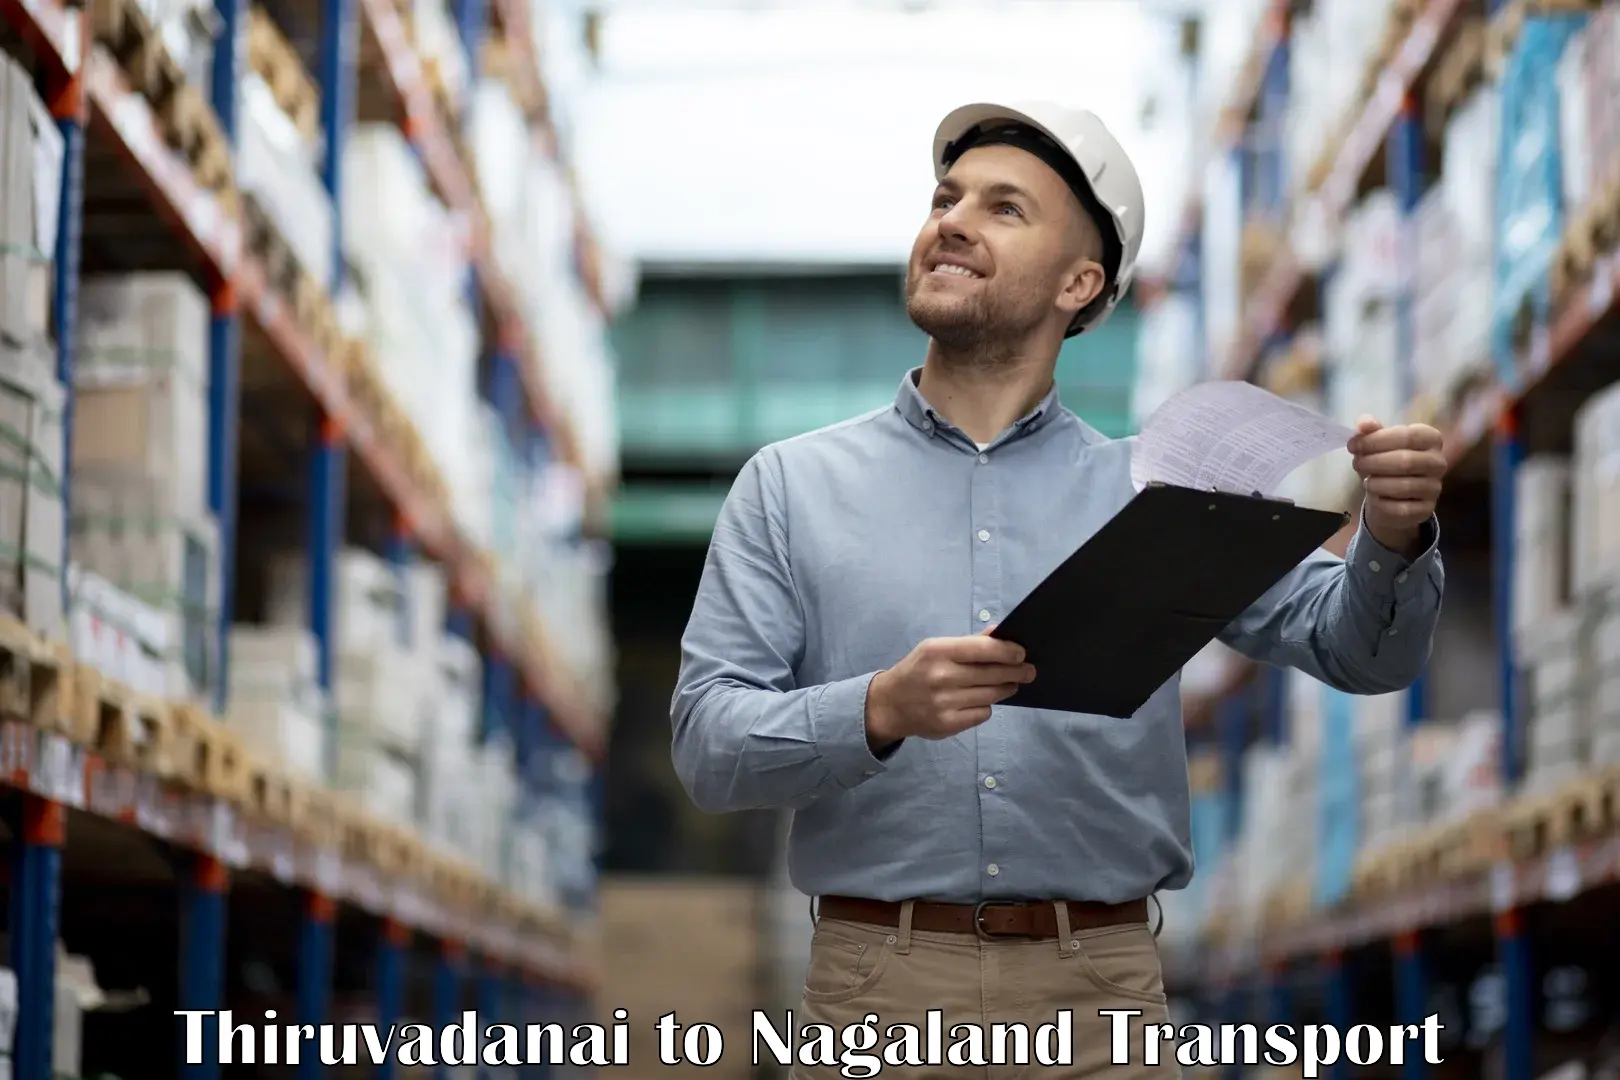 Delivery service Thiruvadanai to Mon